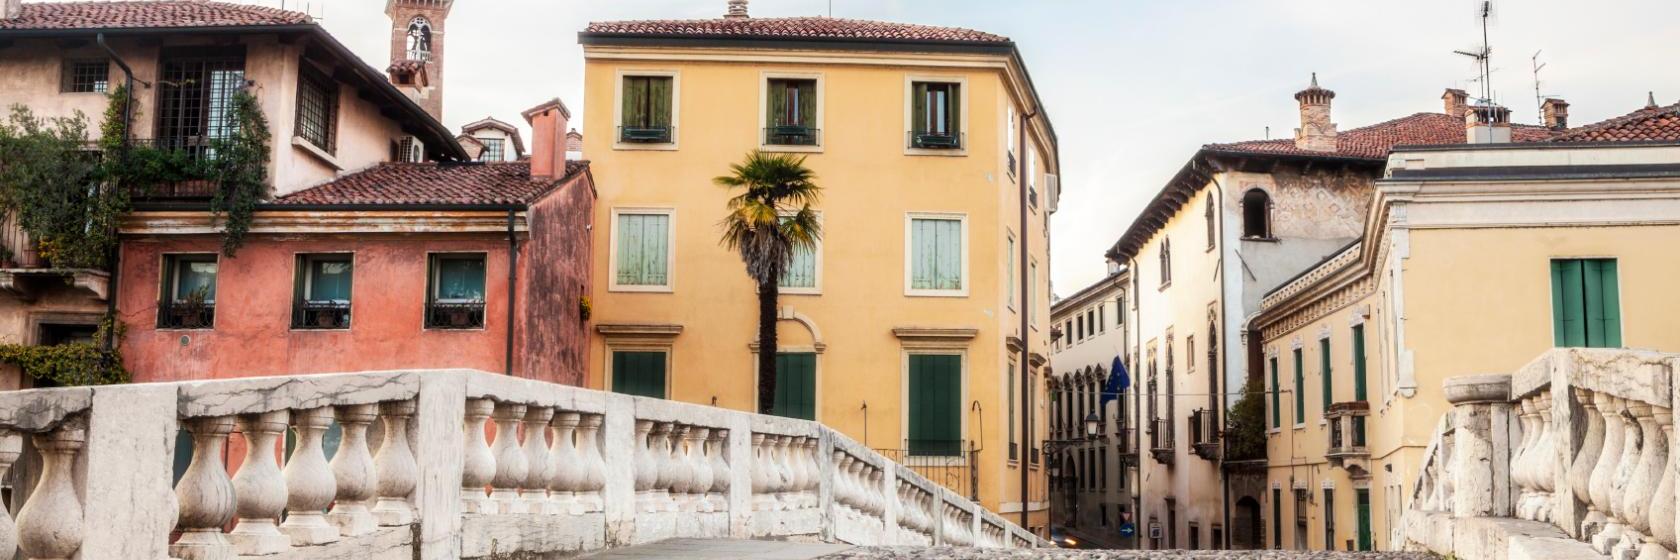 The Best Torri di Quartesolo Hotels, Italy (From $31)